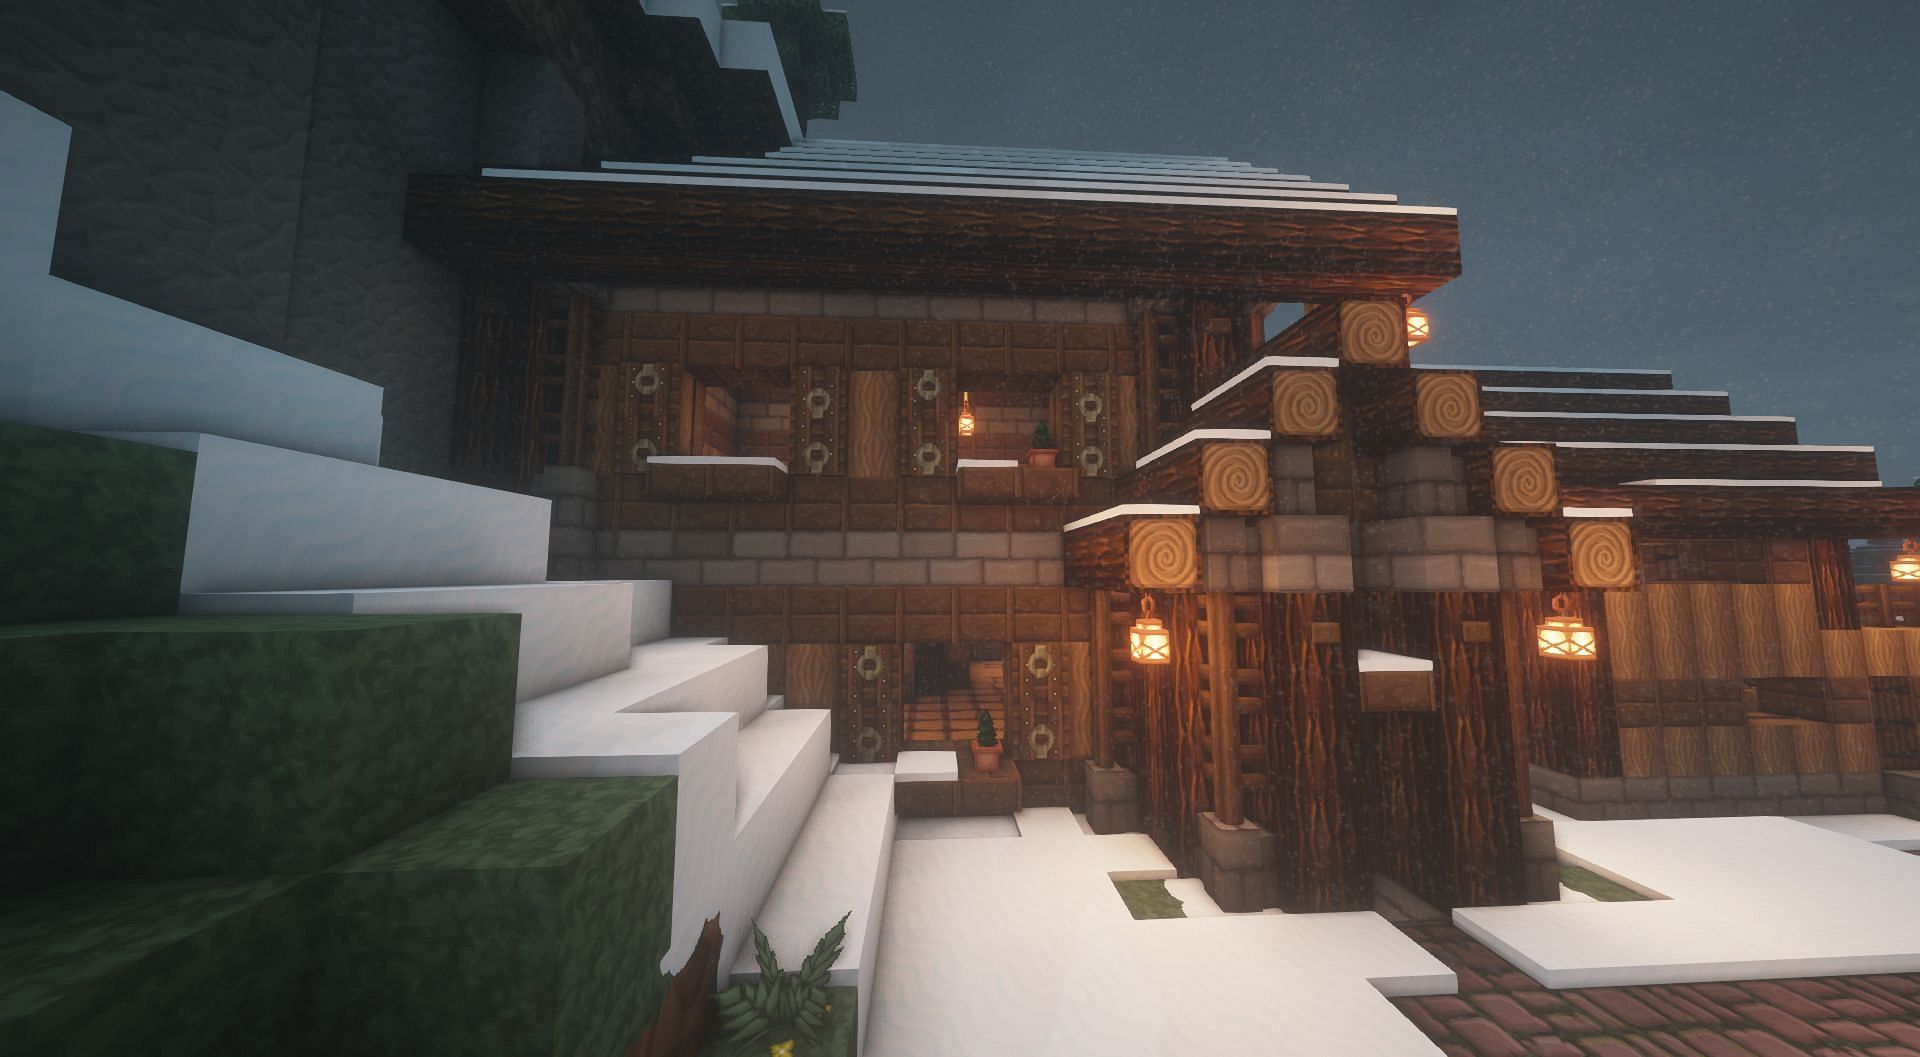 House covered in snow (Image via endman, Imgur)